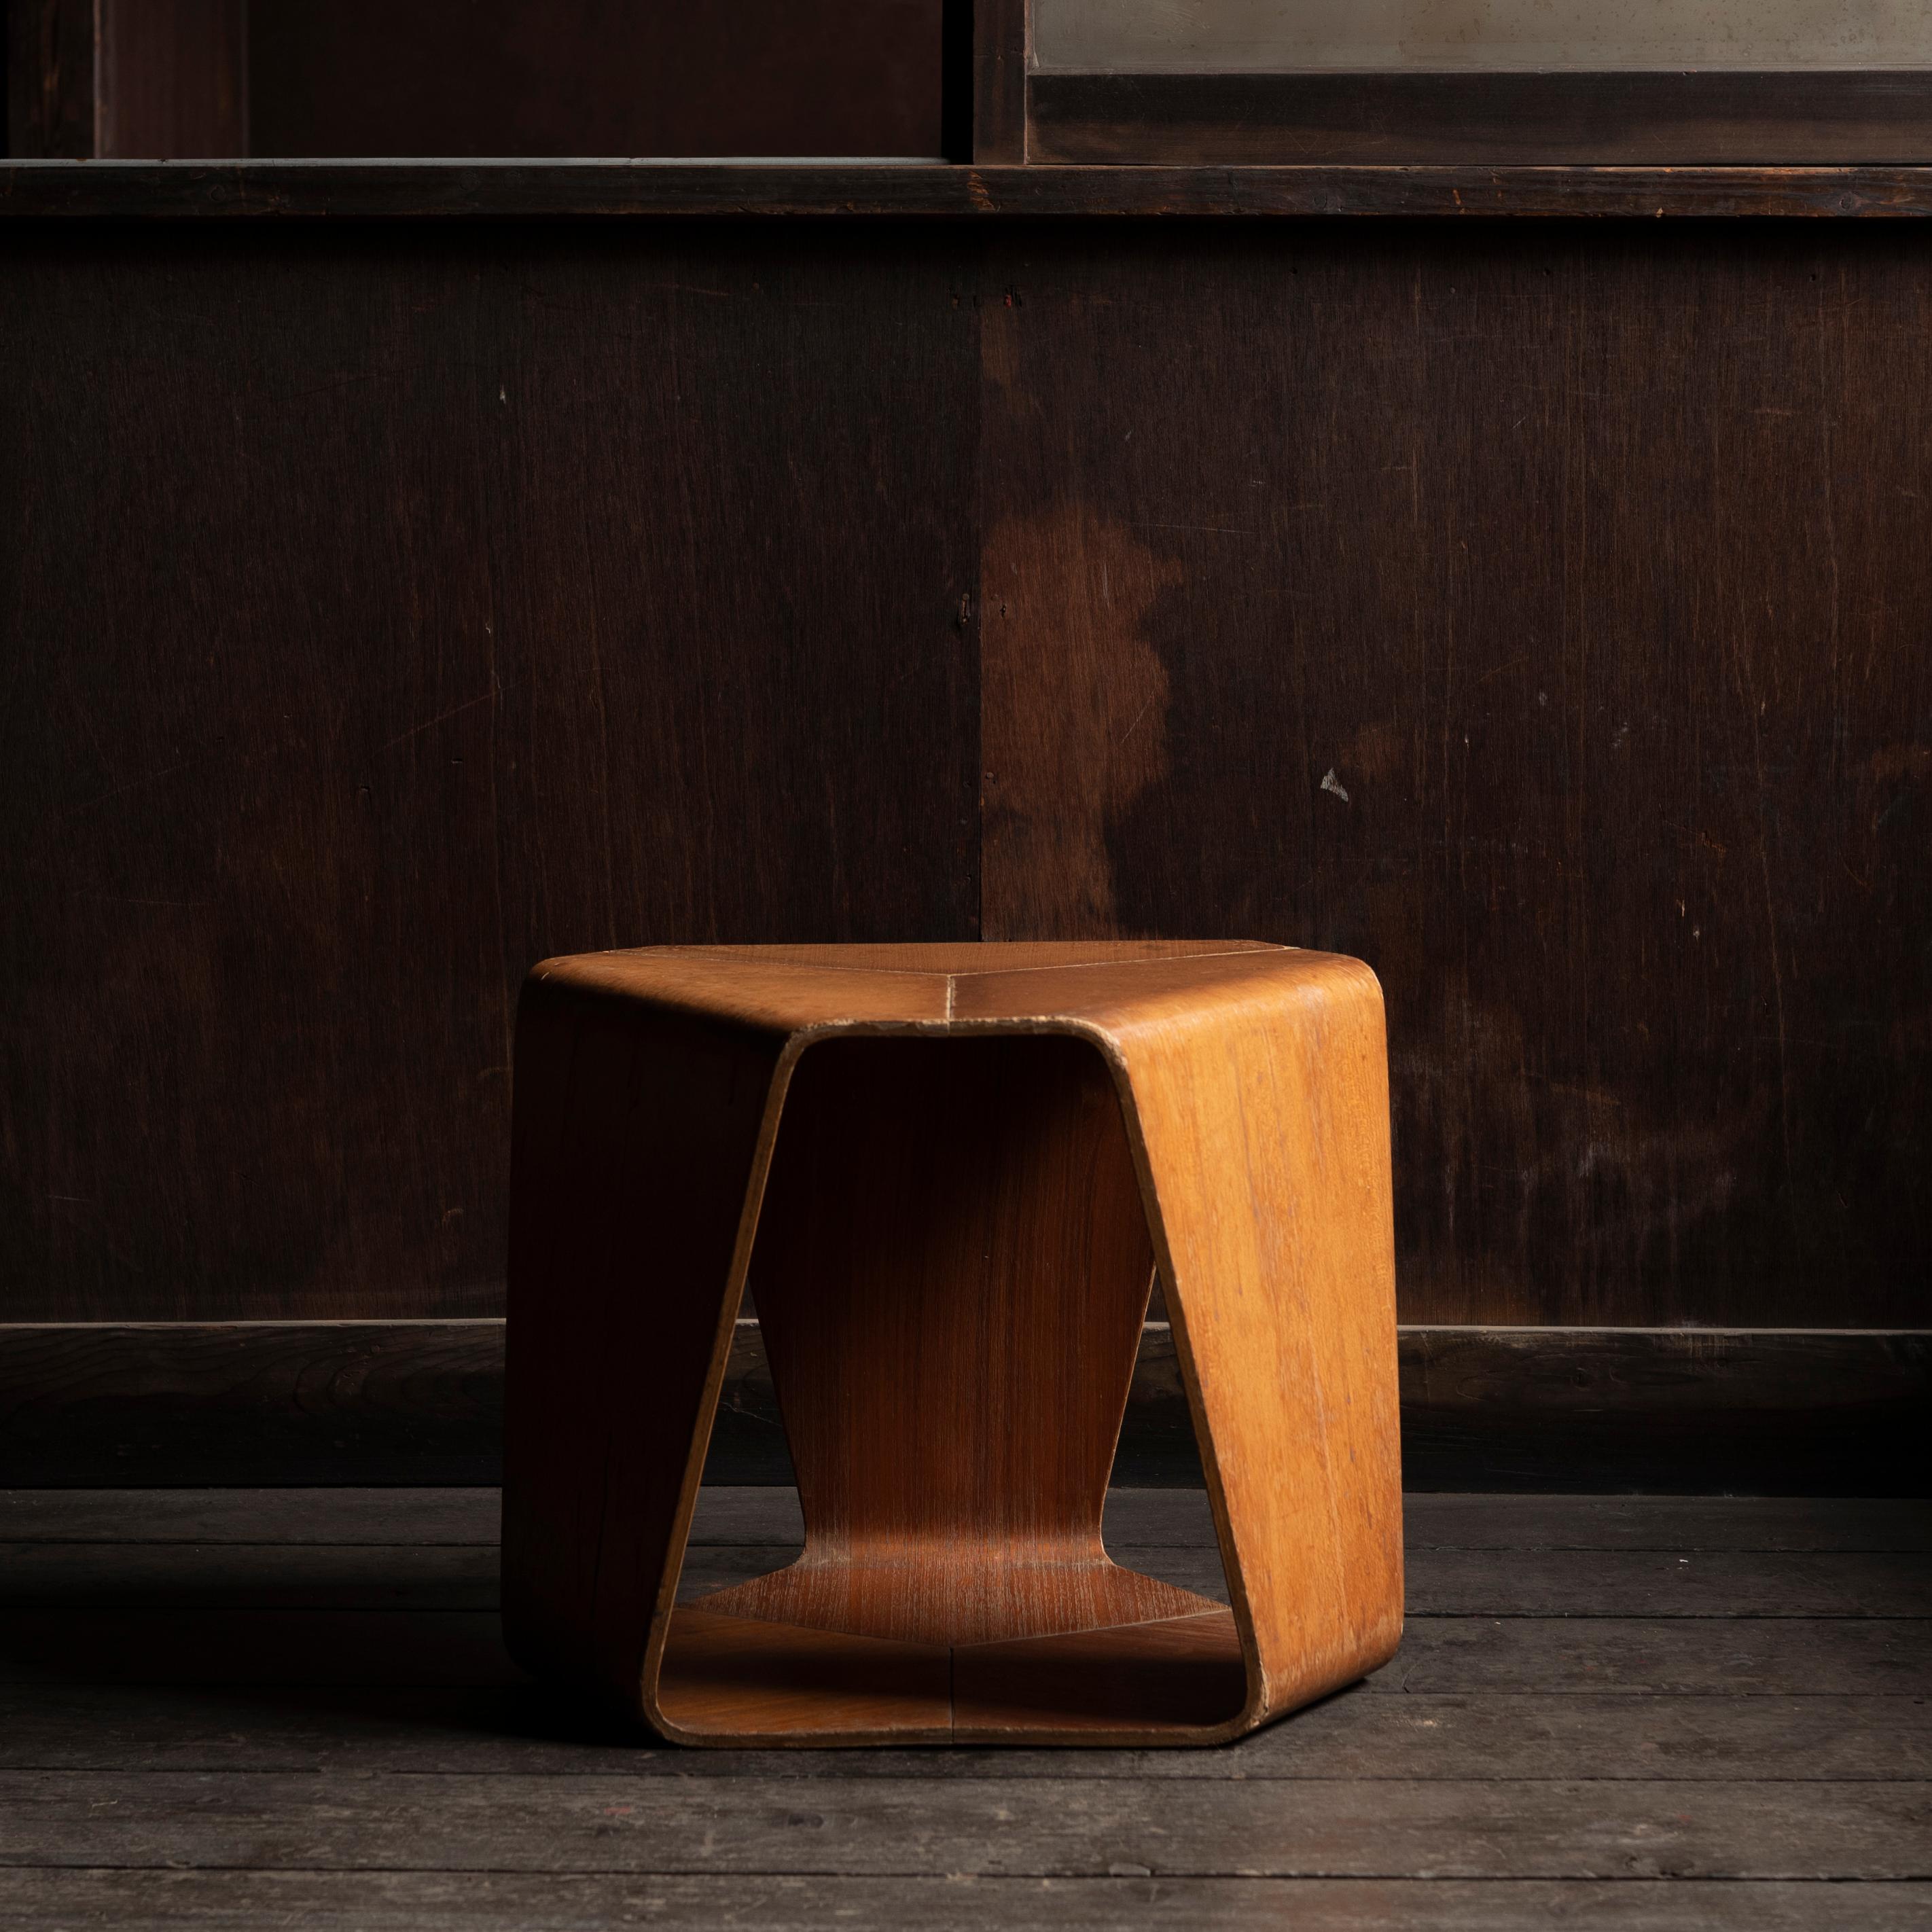 Murai stool, designed by Japanese designer Reiko Tanabe in 1961. 